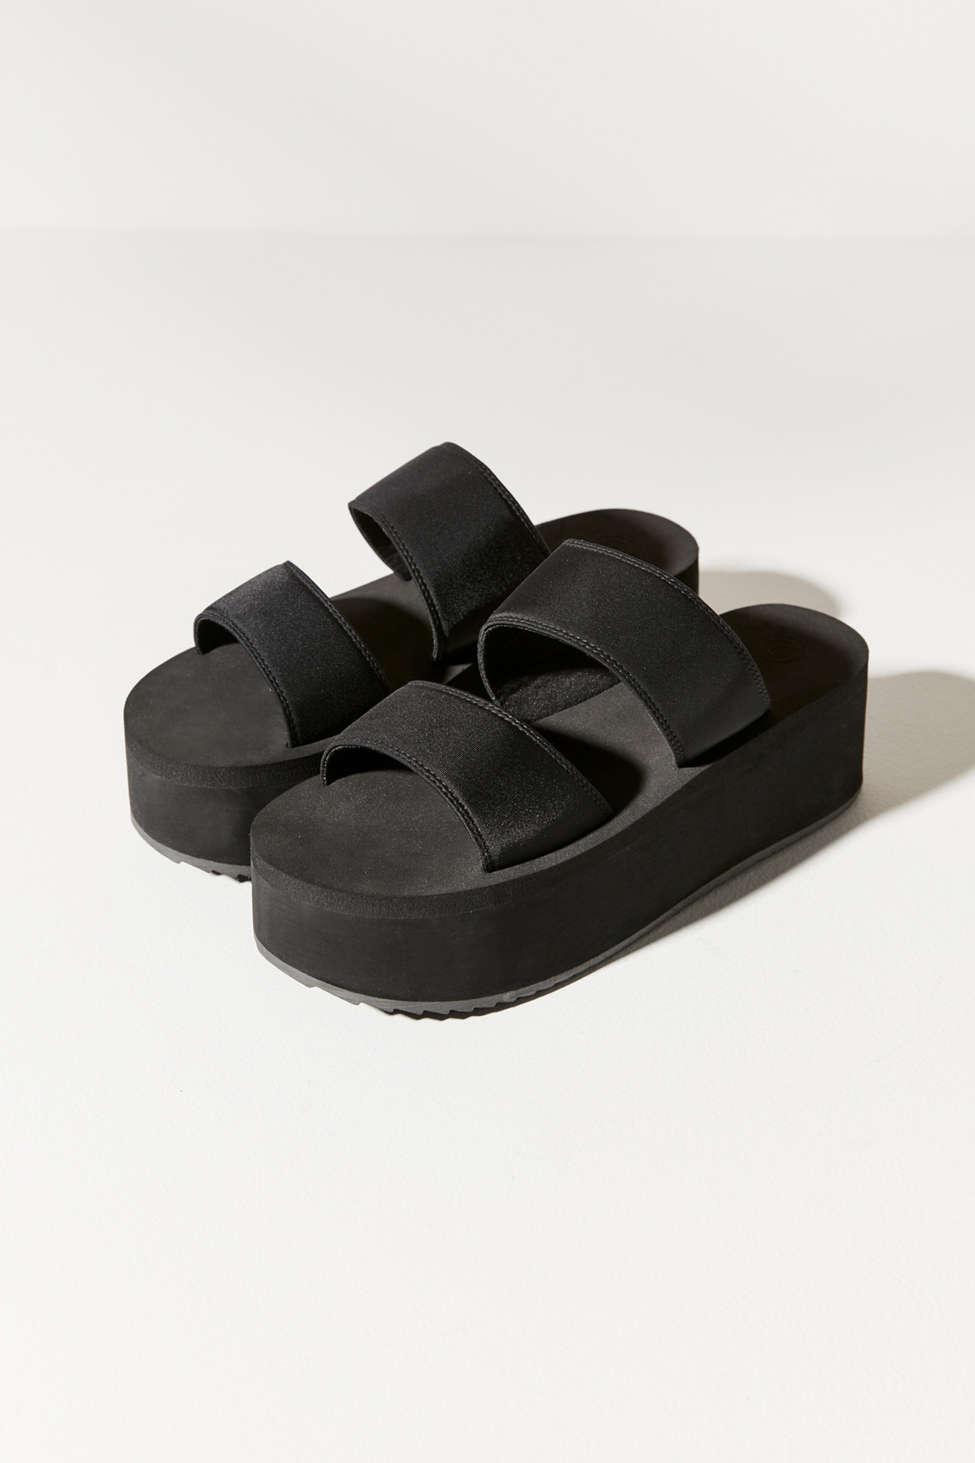 urban outfitters black platform sandals